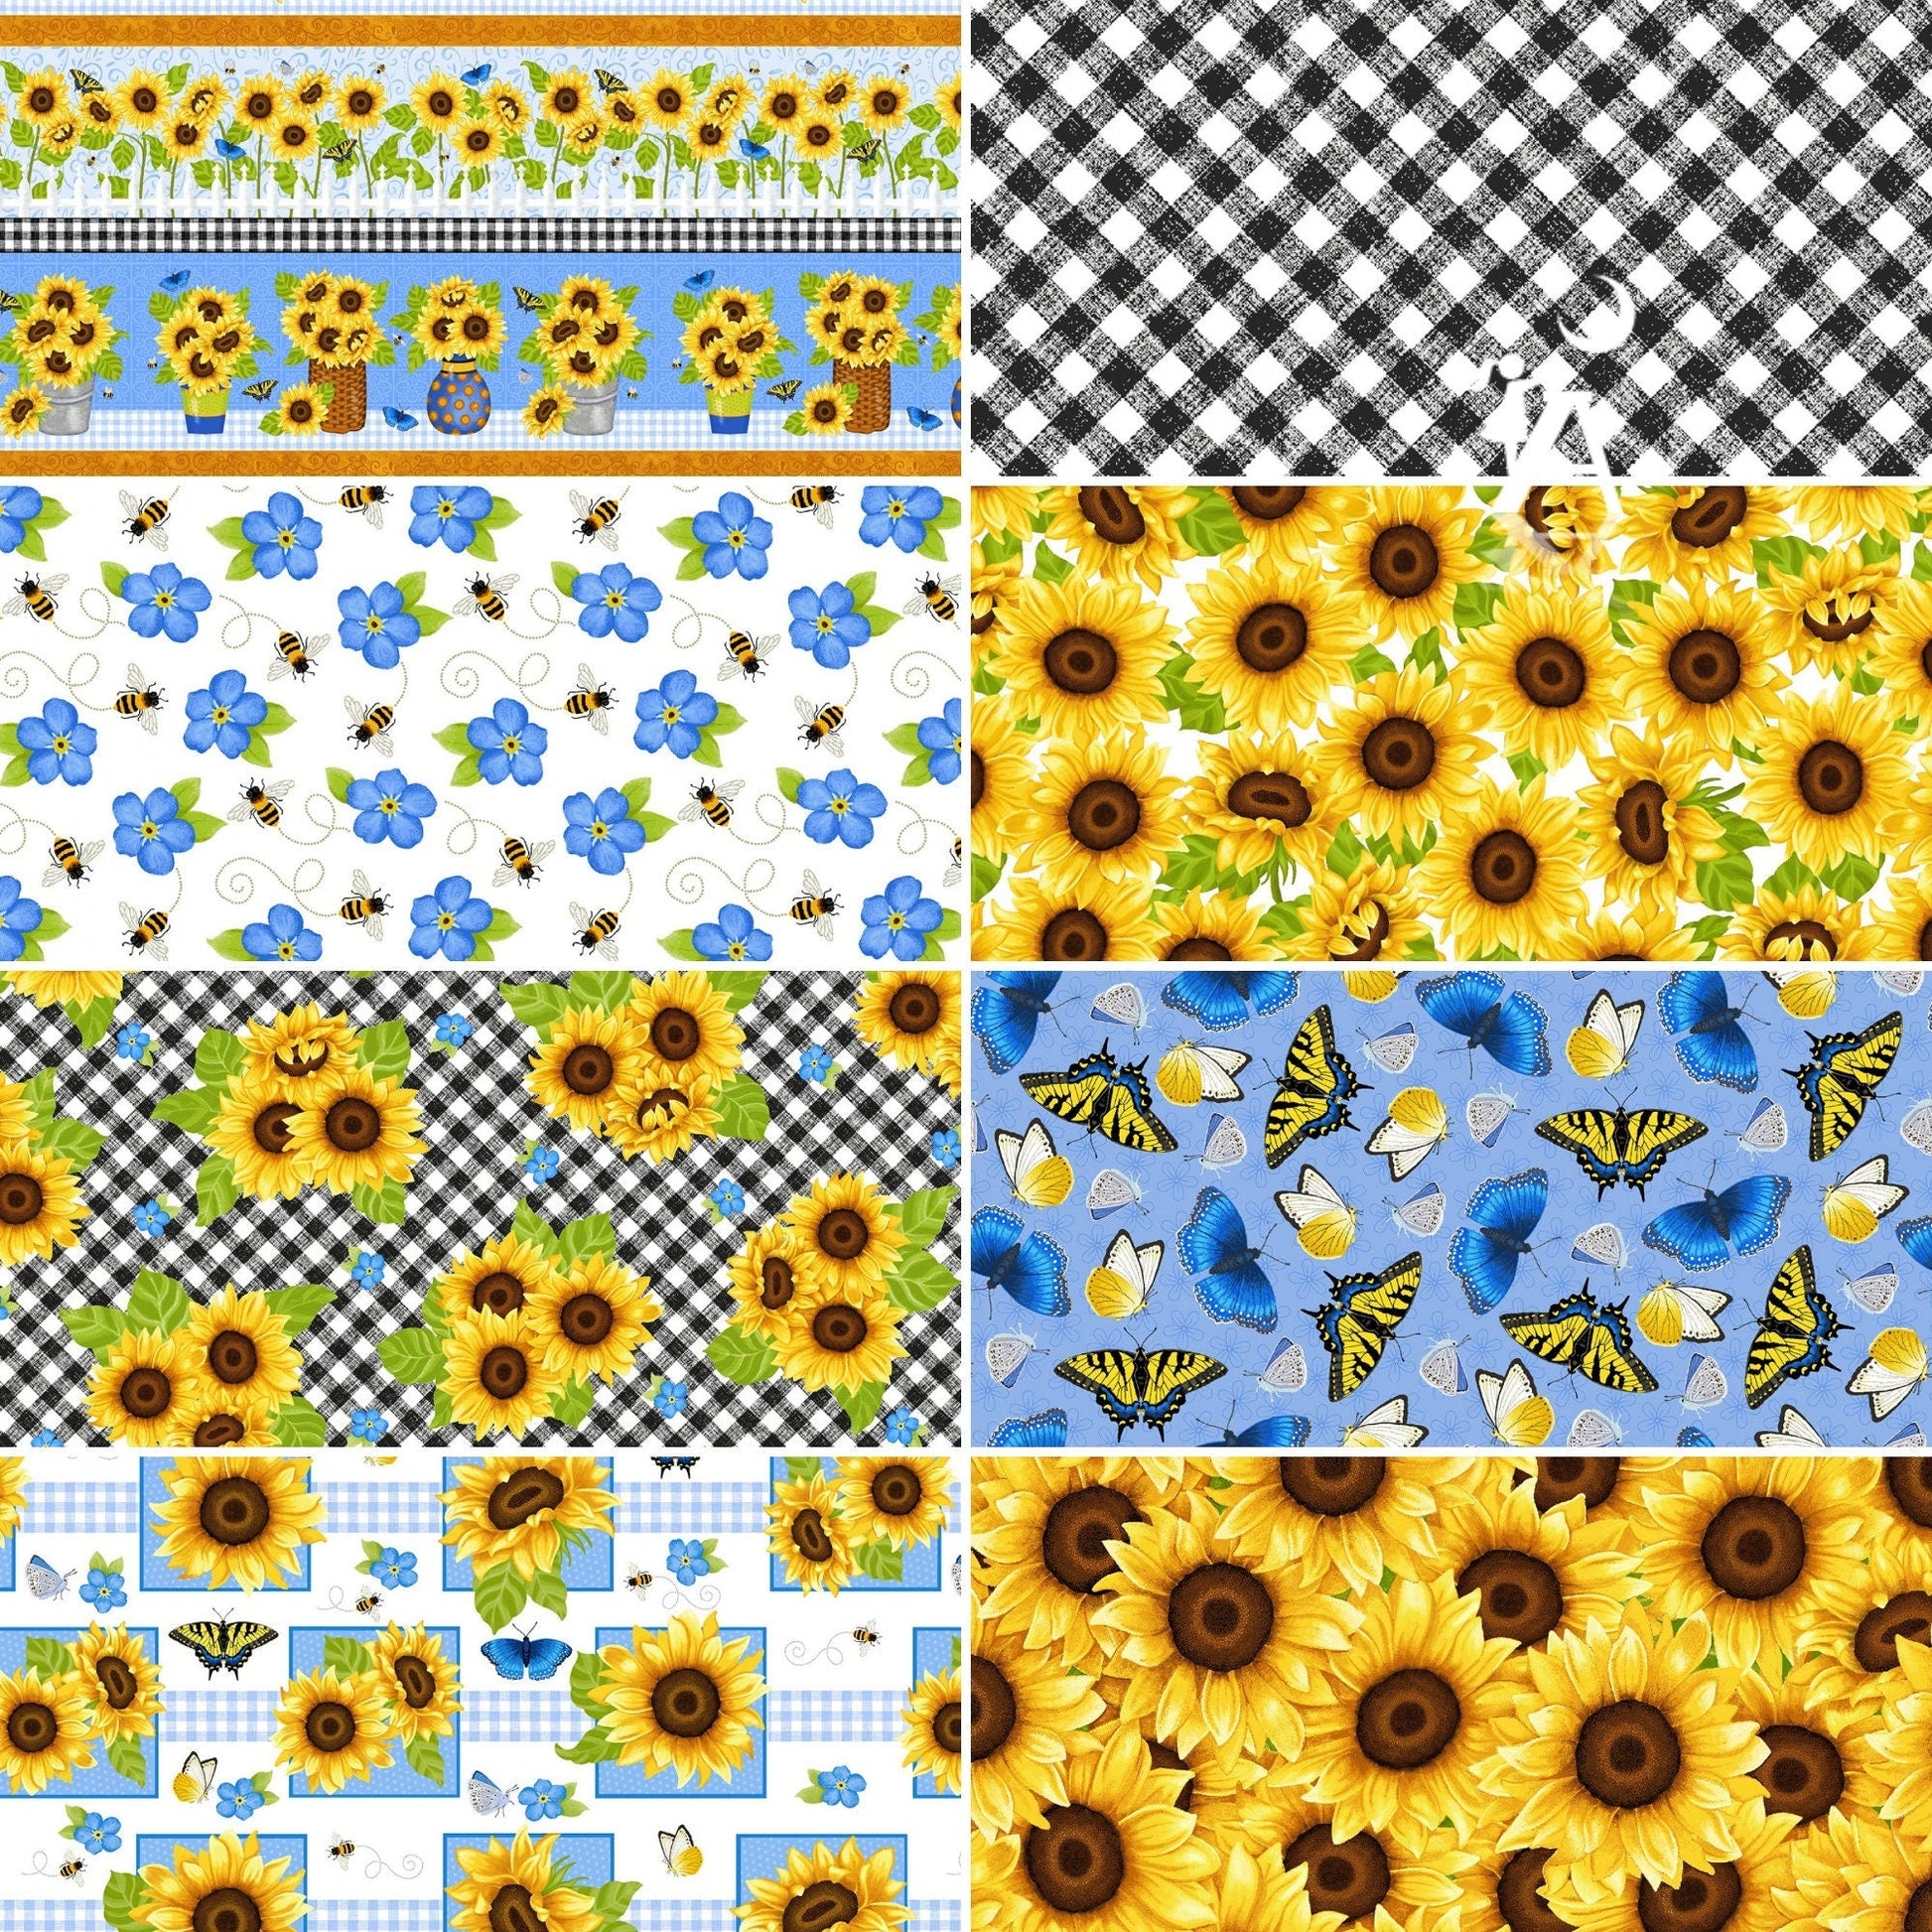 Studio E Fabric 8 FAT QUARTERS only (NO PANELS) Sunny Sunflowers by Studio E Fabric Bundle, FQ Bundle Fabric, Honey Bee Cotton Fabric, Sunflower Panel, Sunflower Blocks, Bee Fabric